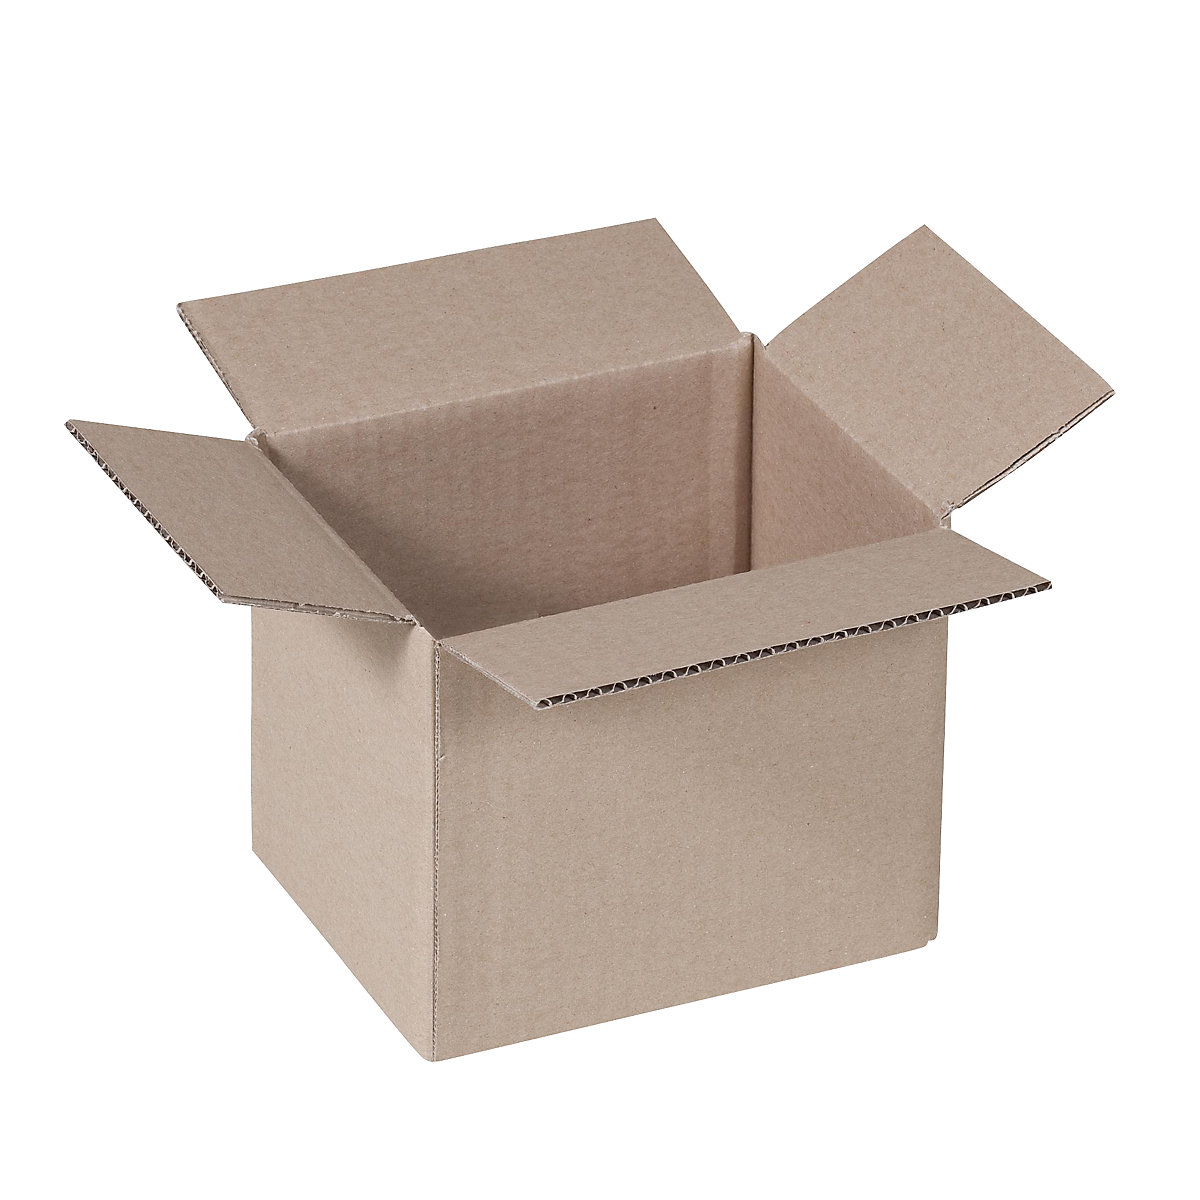 Folding cardboard box, FEFCO 0201, made of single fluted cardboard, internal dimensions 180 x 130 x 120 mm, pack of 100-26